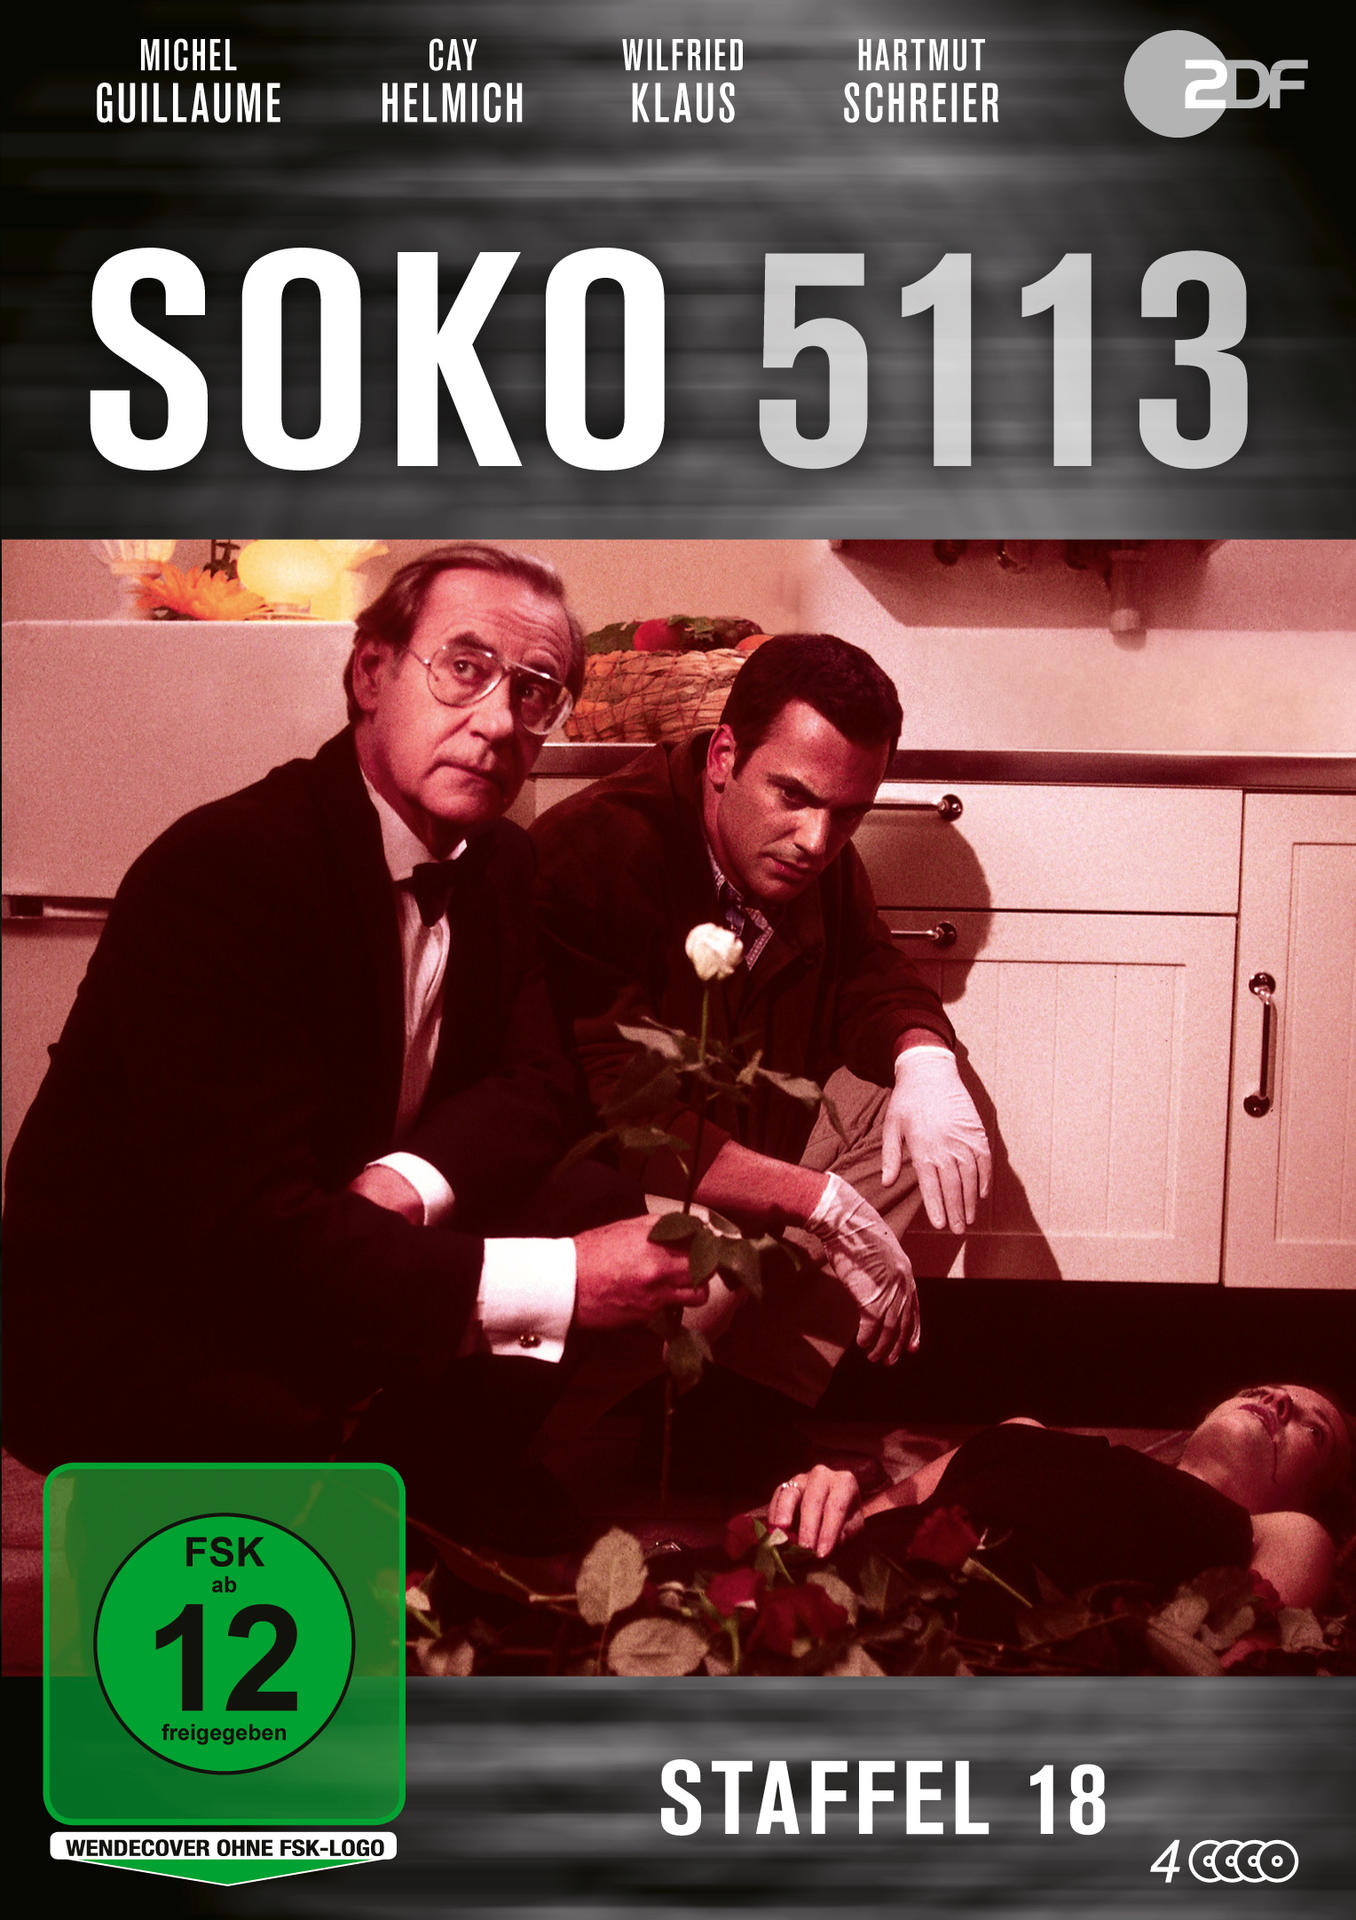 18 5113 - Soko DVD Staffel